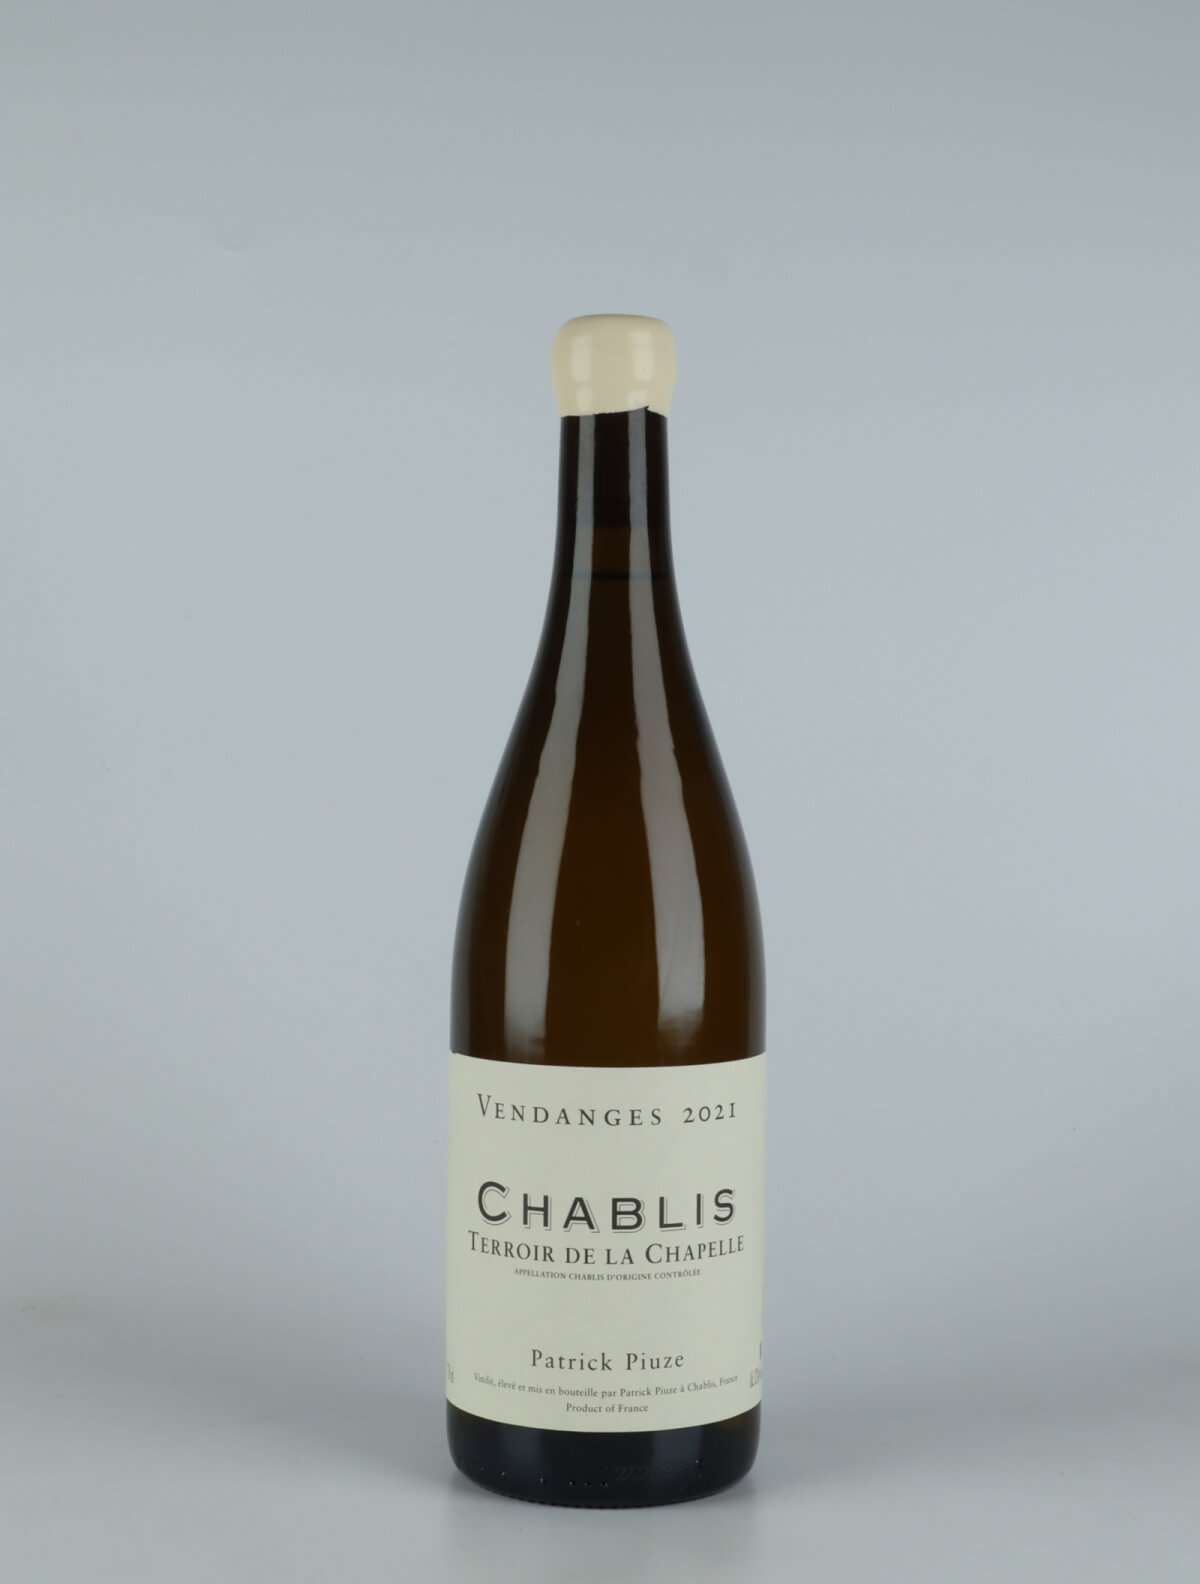 En flaske 2021 Chablis - Terroir de la Chapelle Hvidvin fra Patrick Piuze, Bourgogne i Frankrig